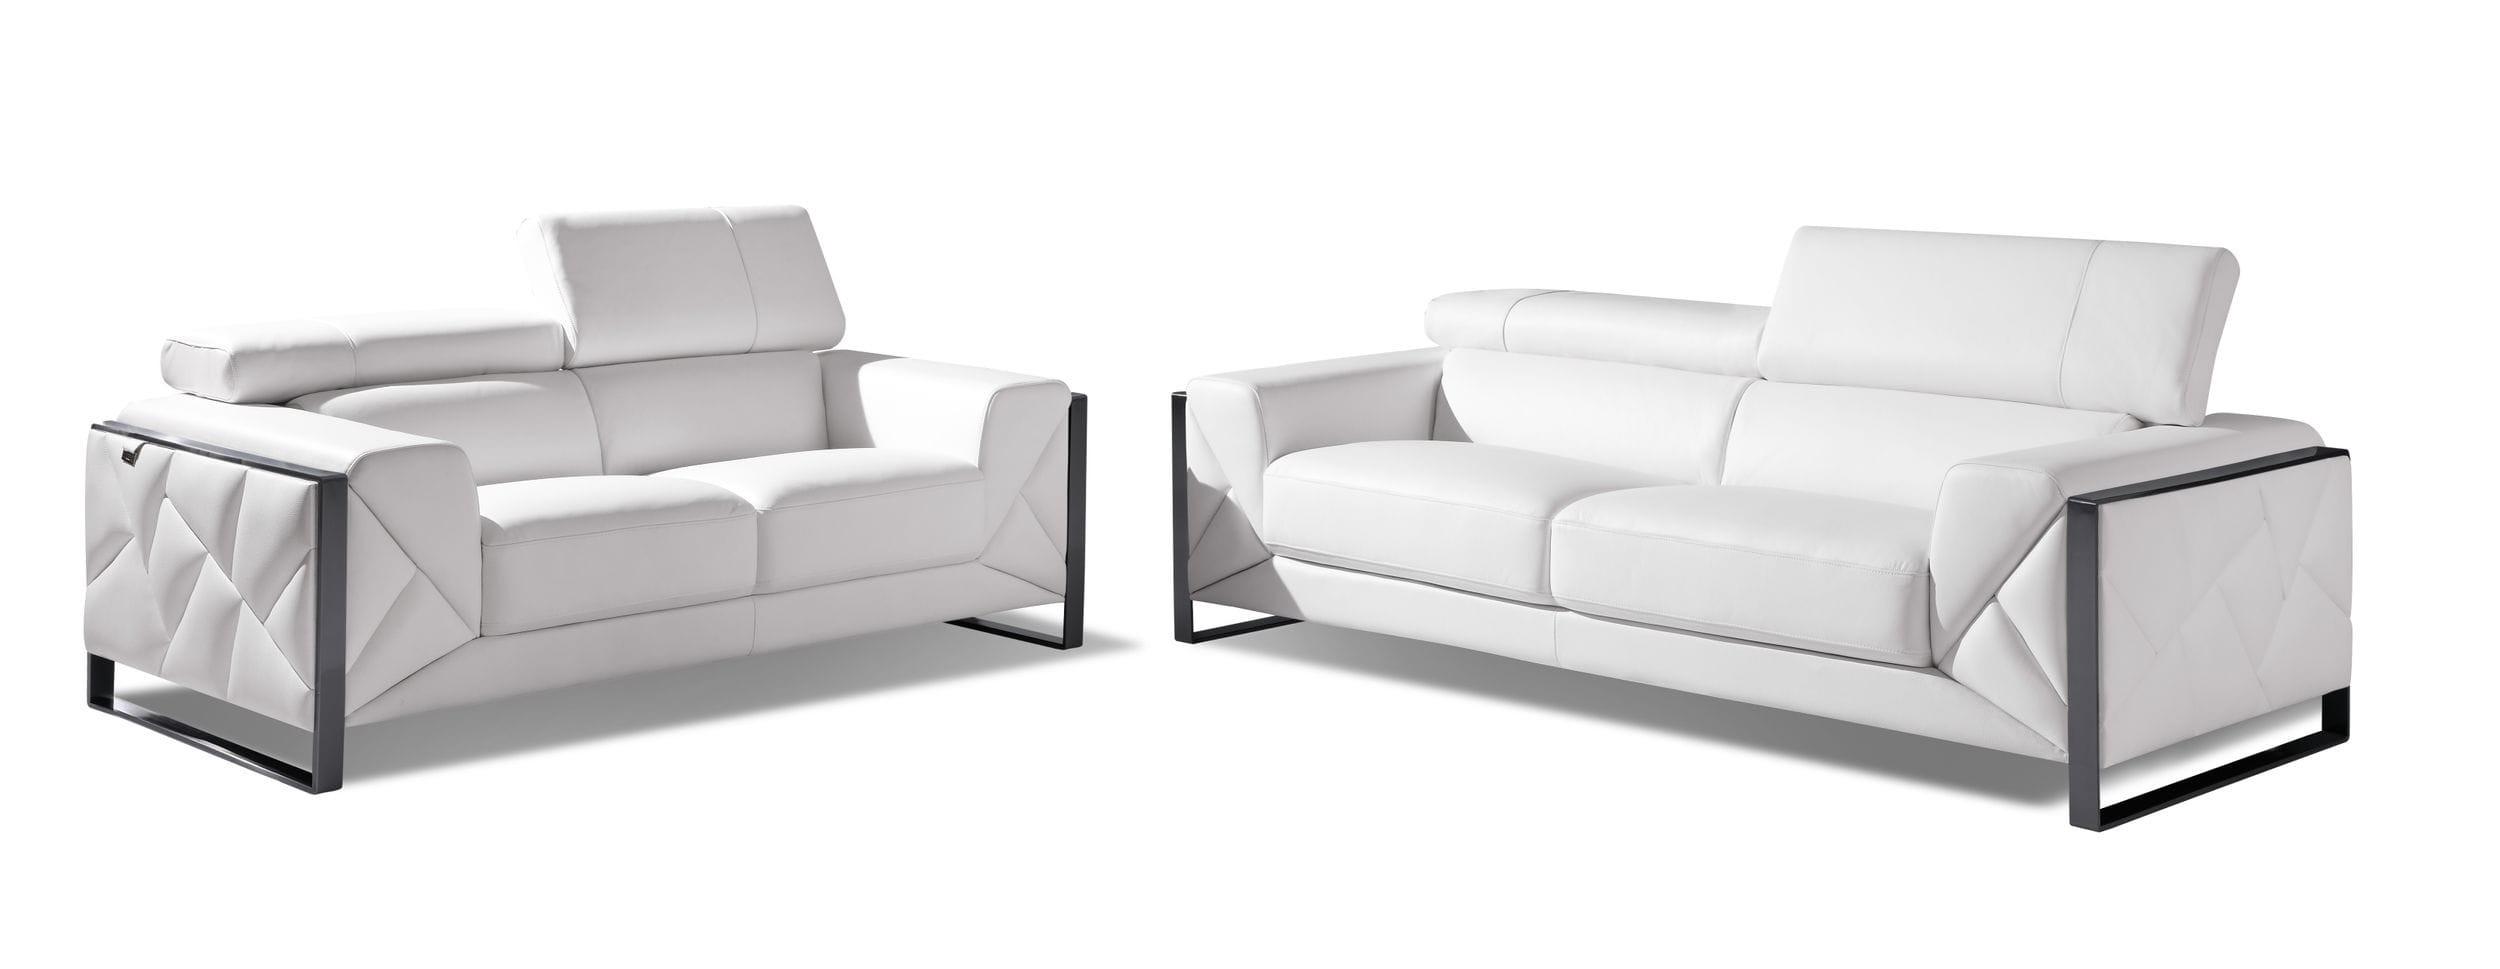 Contemporary Sofa and Loveseat Set 903-WHITE 903-WHITE-2PC in White Genuine Italian Leatder